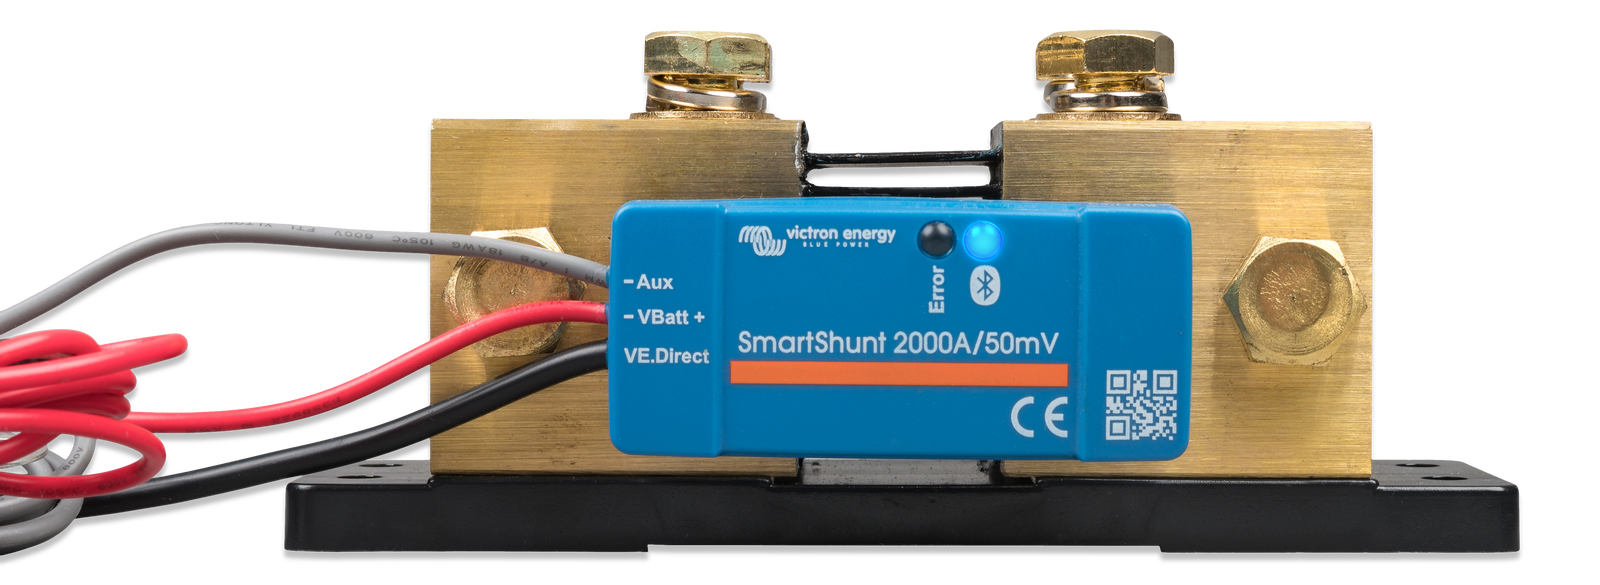 Victron Smartshunt 500AMP/50MV Bluetooth Smart Battery Shunt – vastvanparts